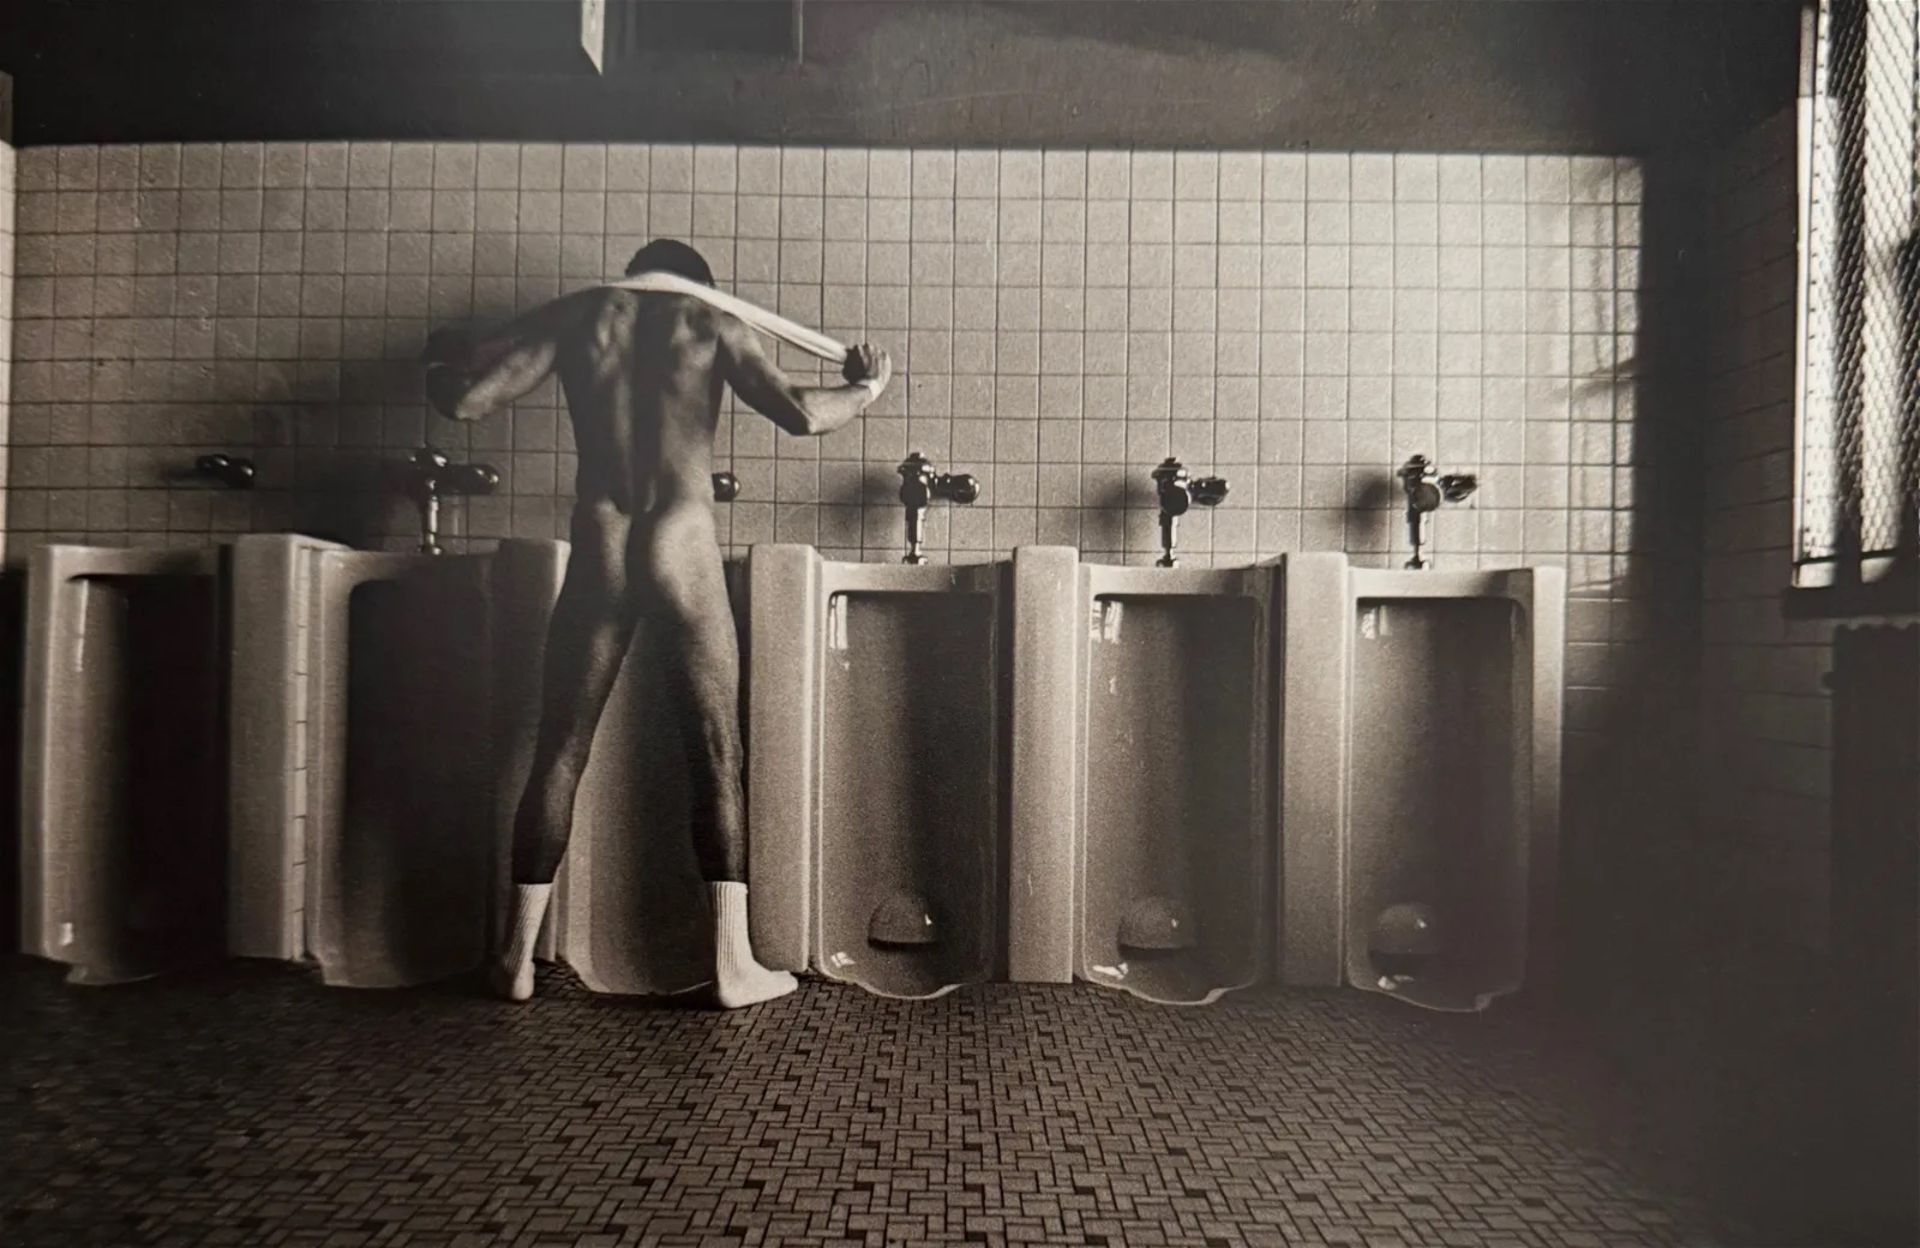 Ken Haak "Urinal, Nude" Print